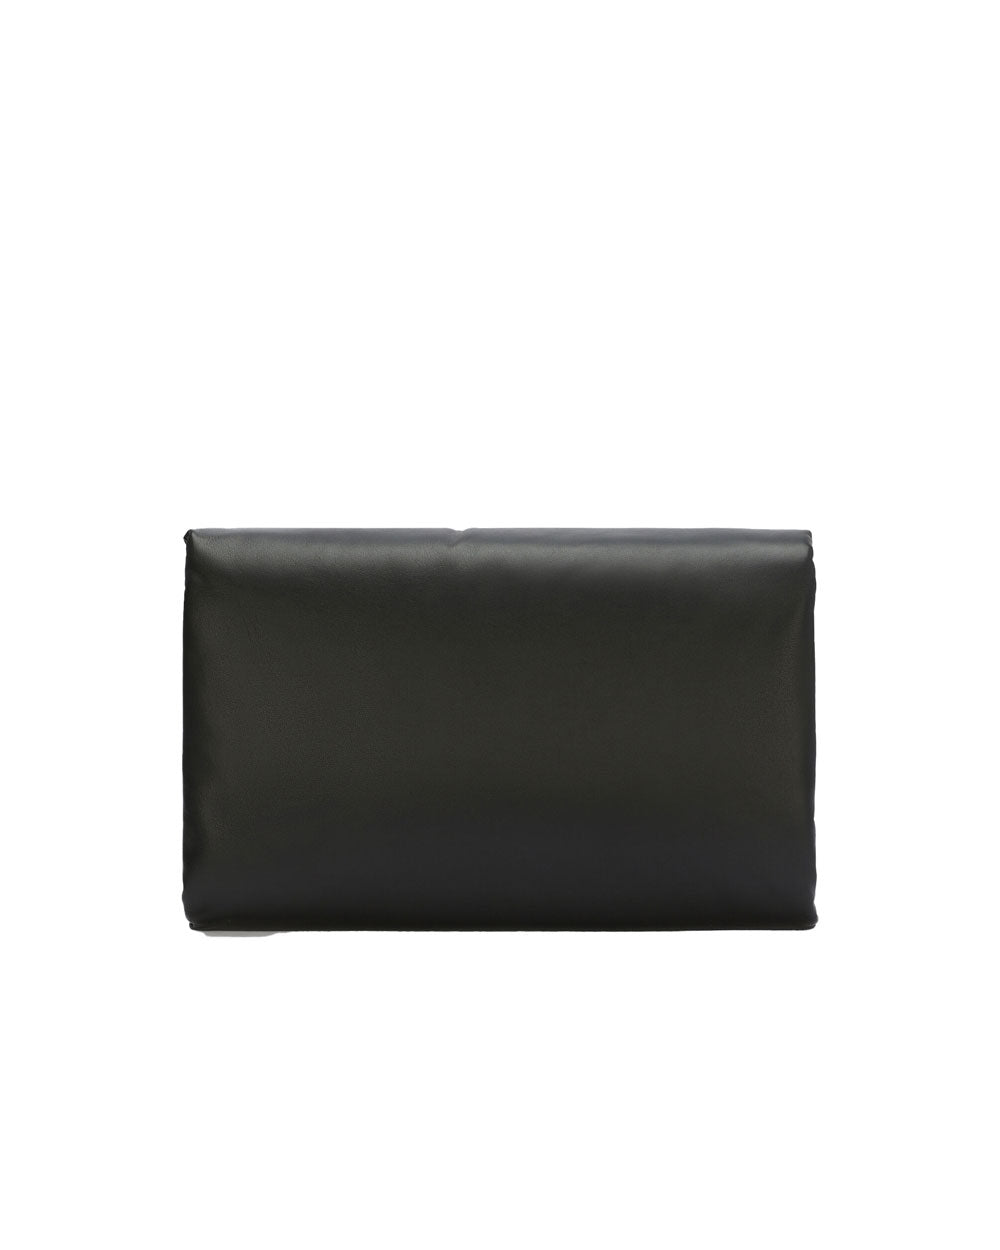 Calfskin Devotional Soft Bag in Black